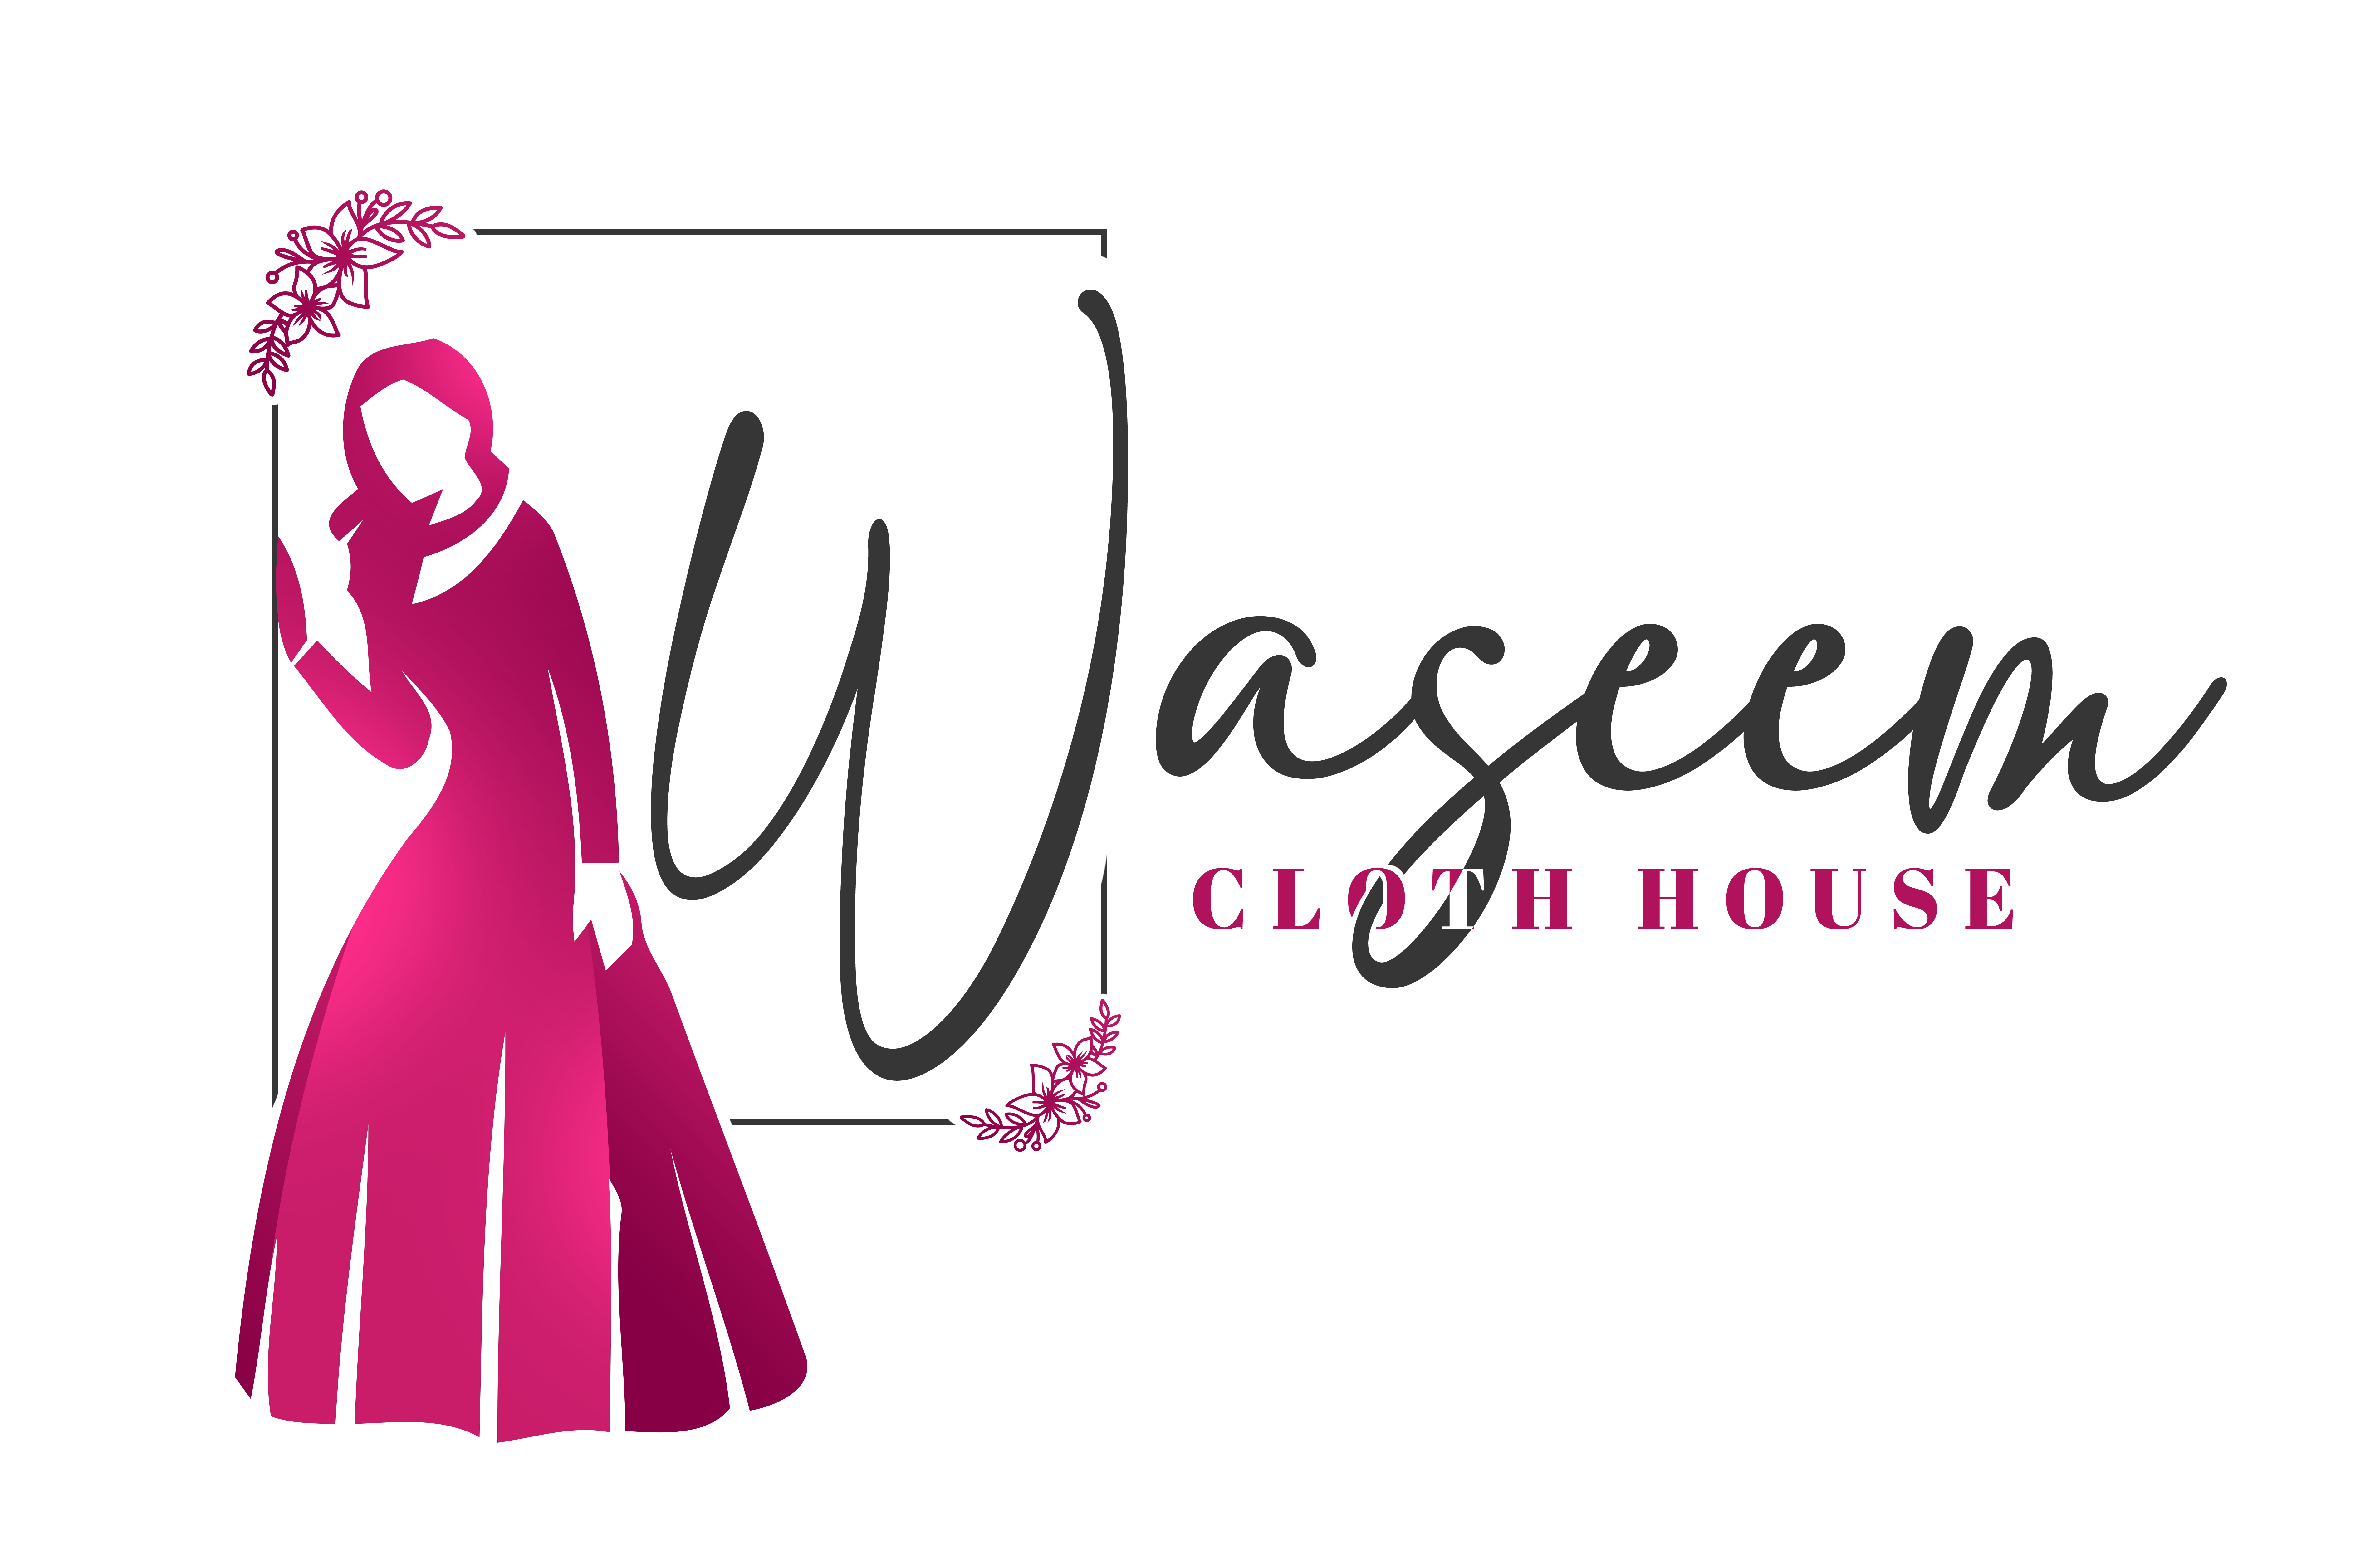 waseem cloth house